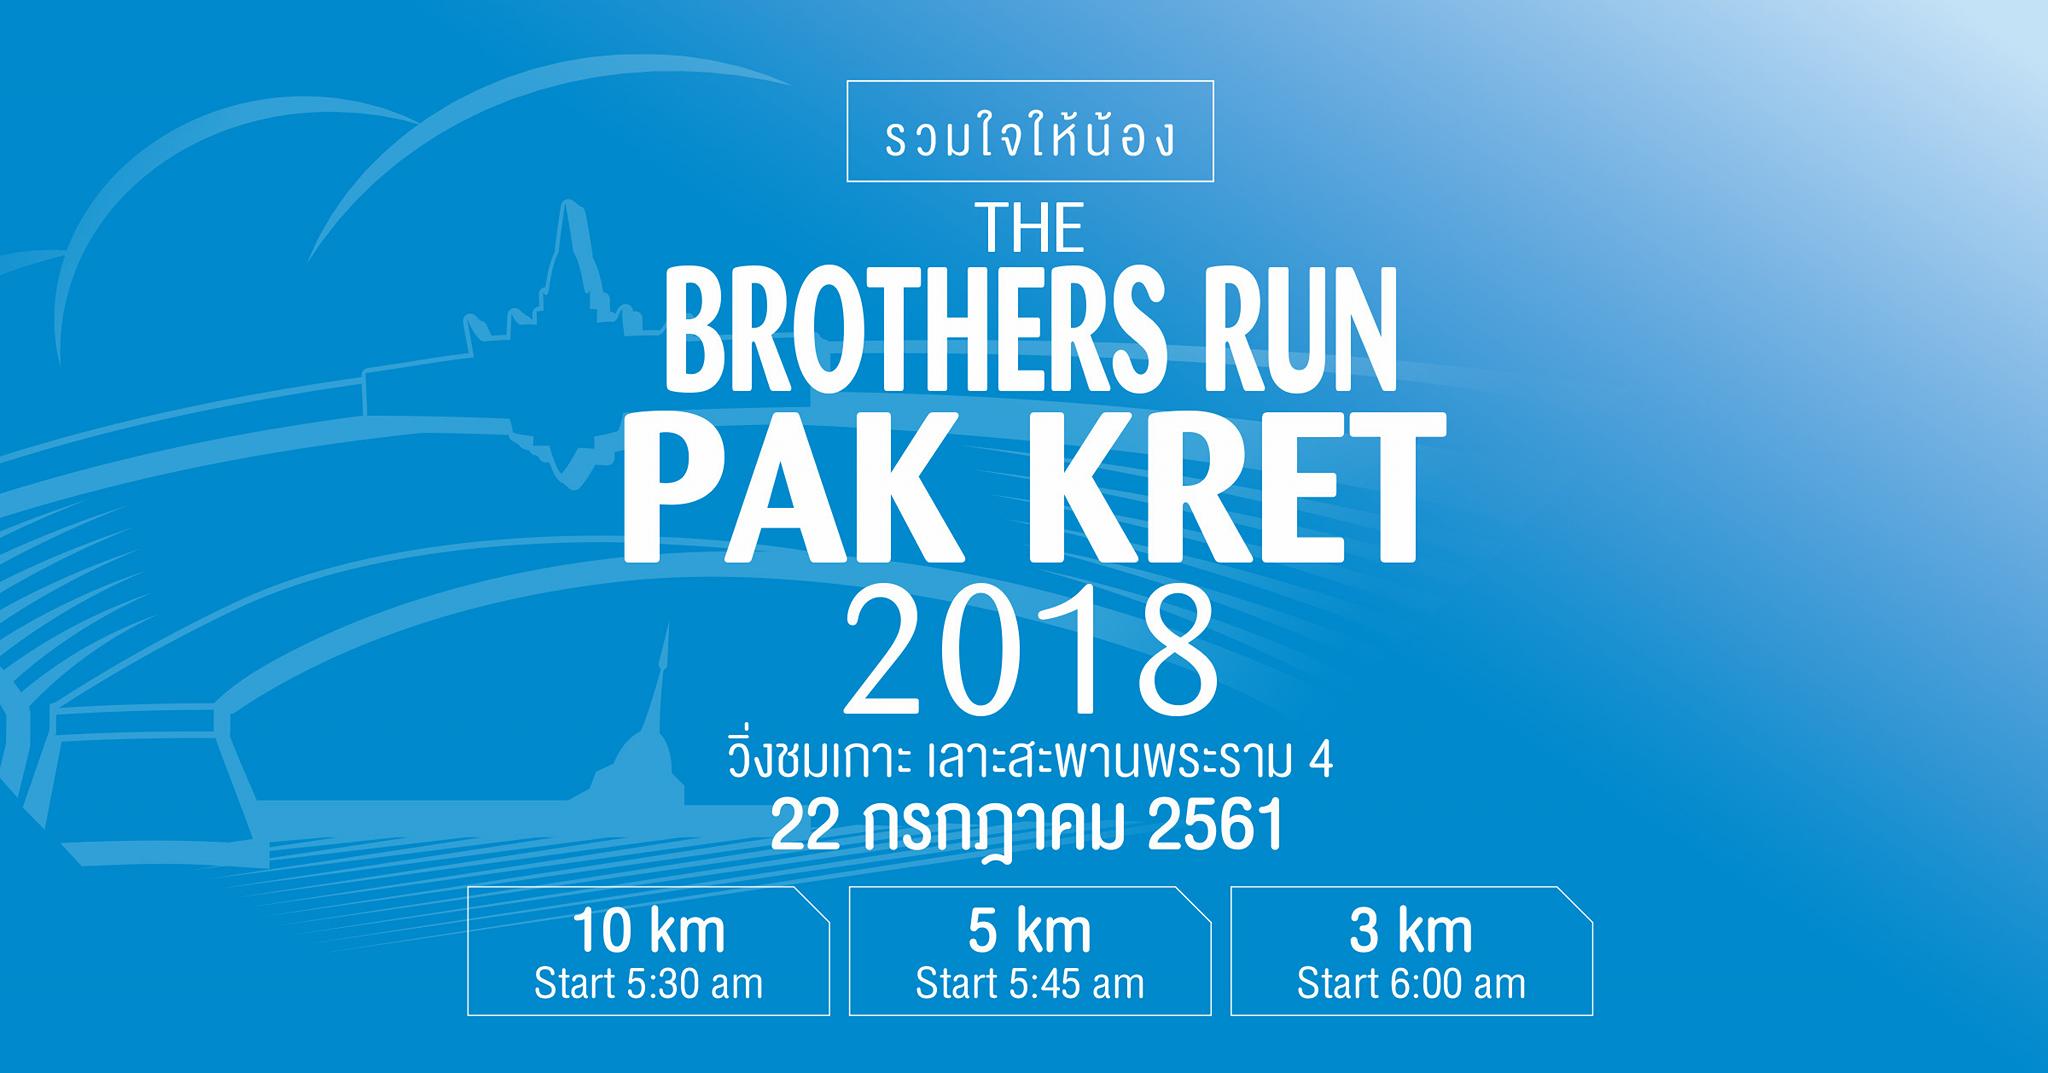 The Brothers Run Pak Kret 2018